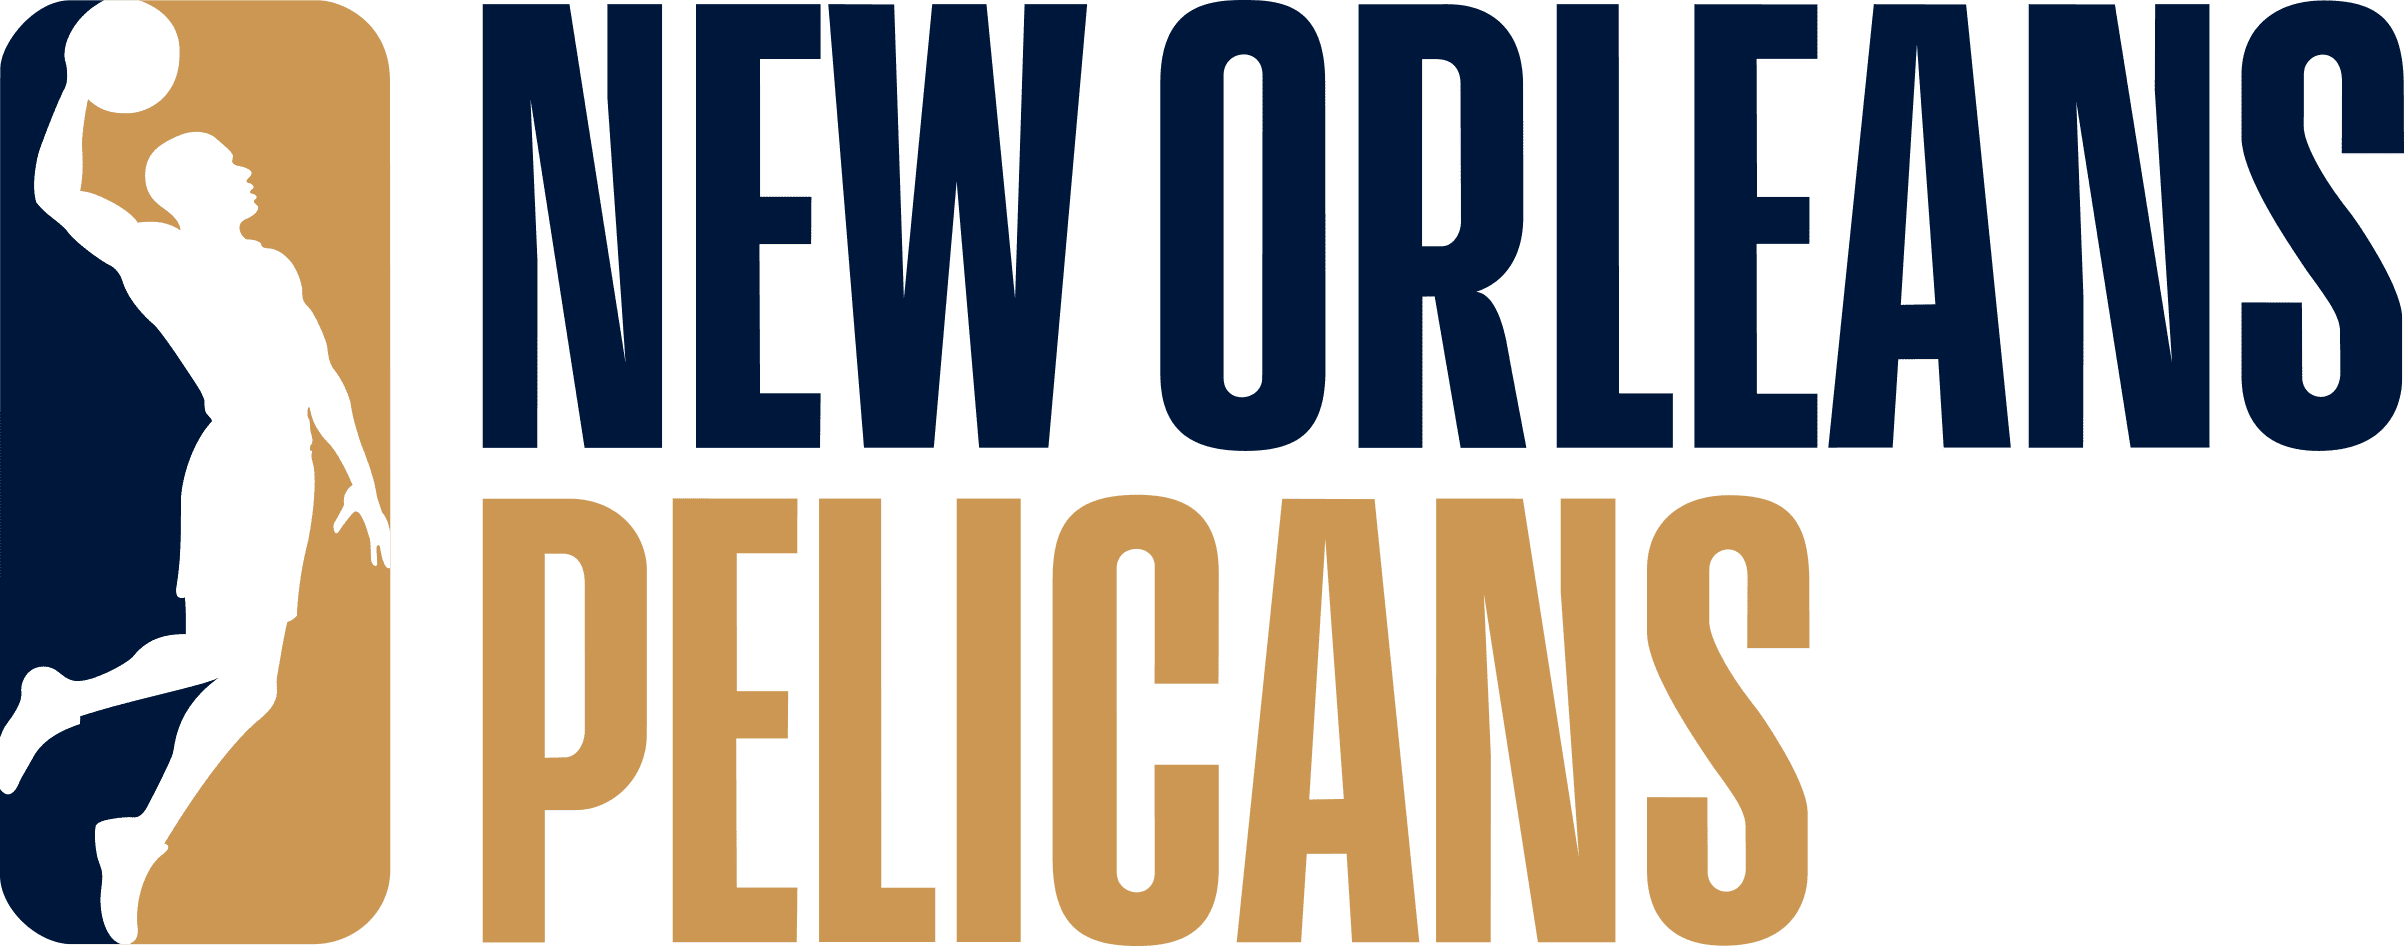 New Orleans Pelicans Logo PNG Transparent & SVG Vector - Freebie